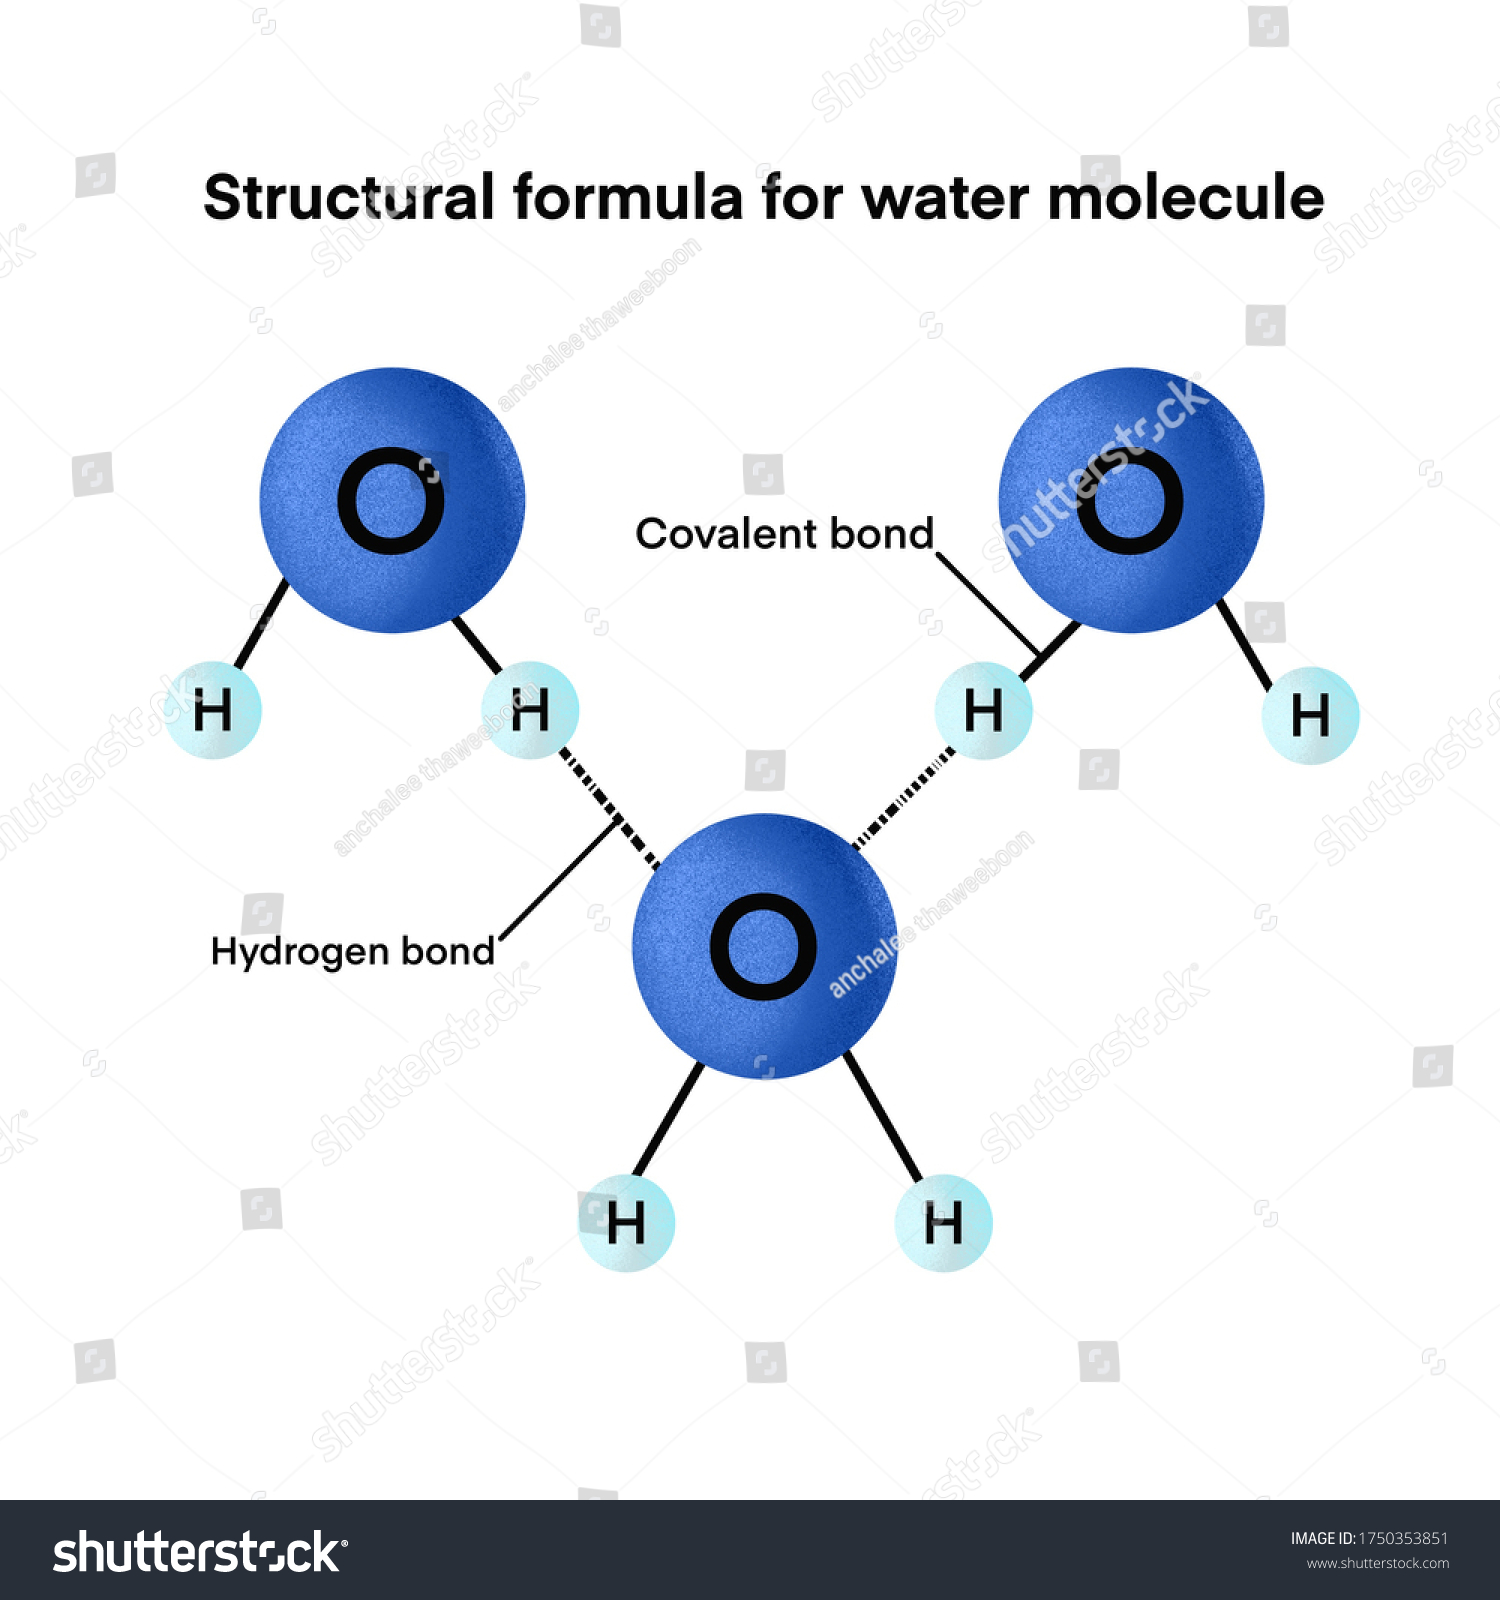 structural-formula-water-molecule-hydrogen-bond-1750353851